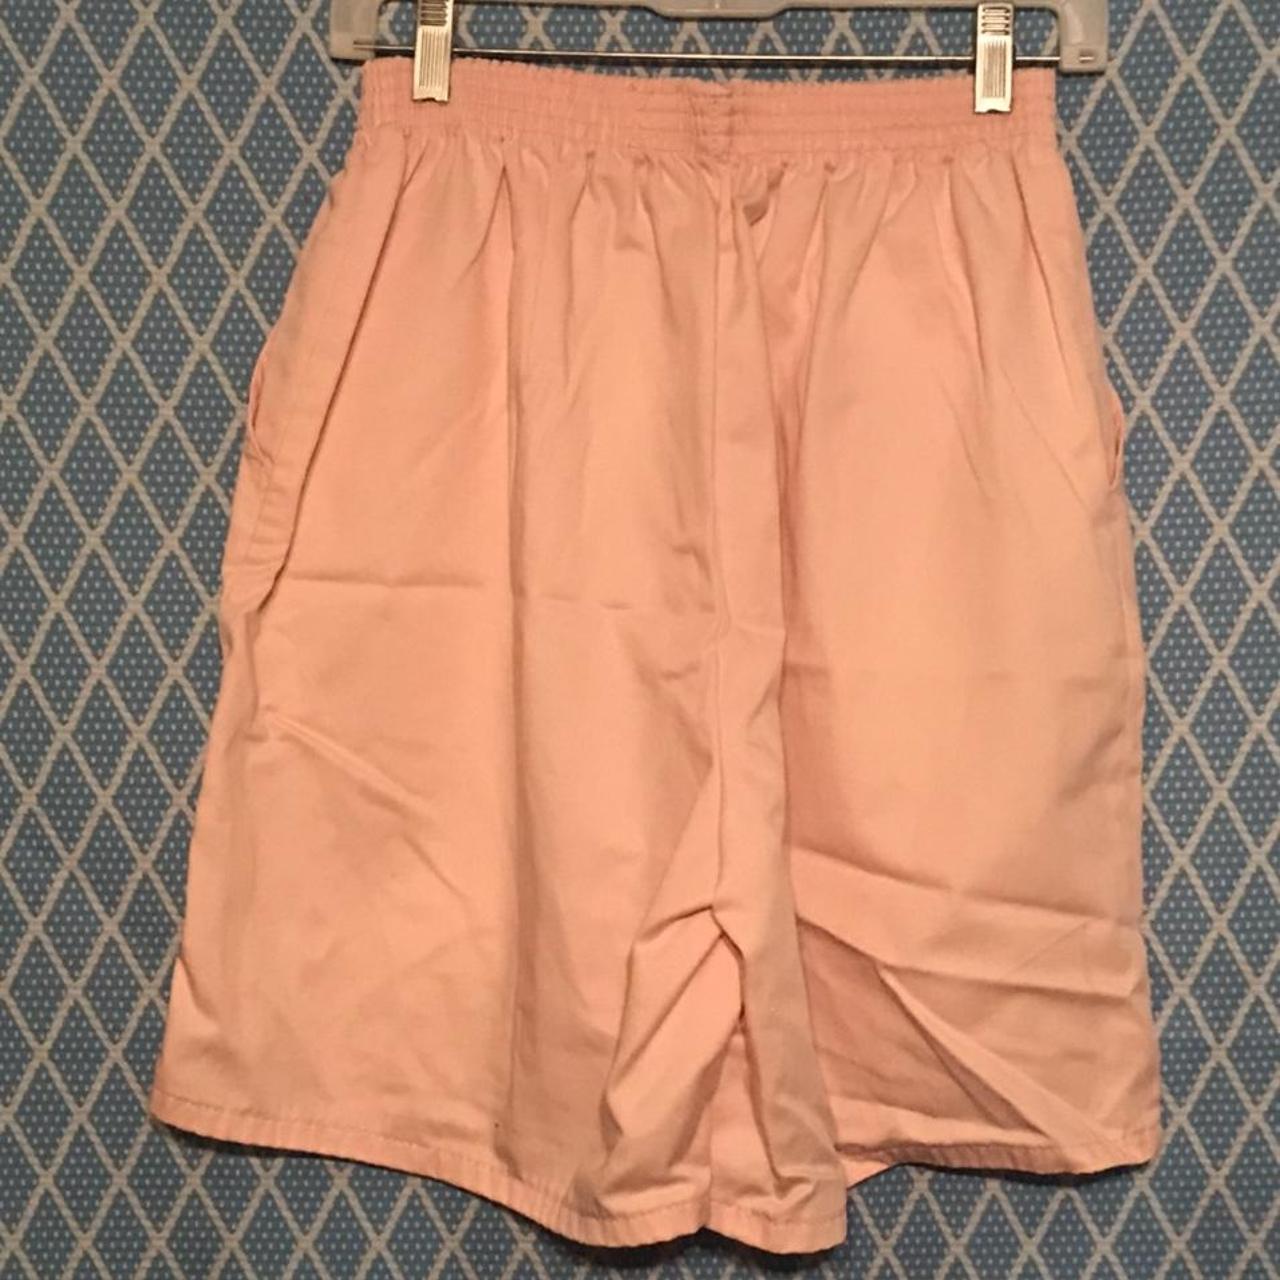 Chic Women's Pink Shorts (3)